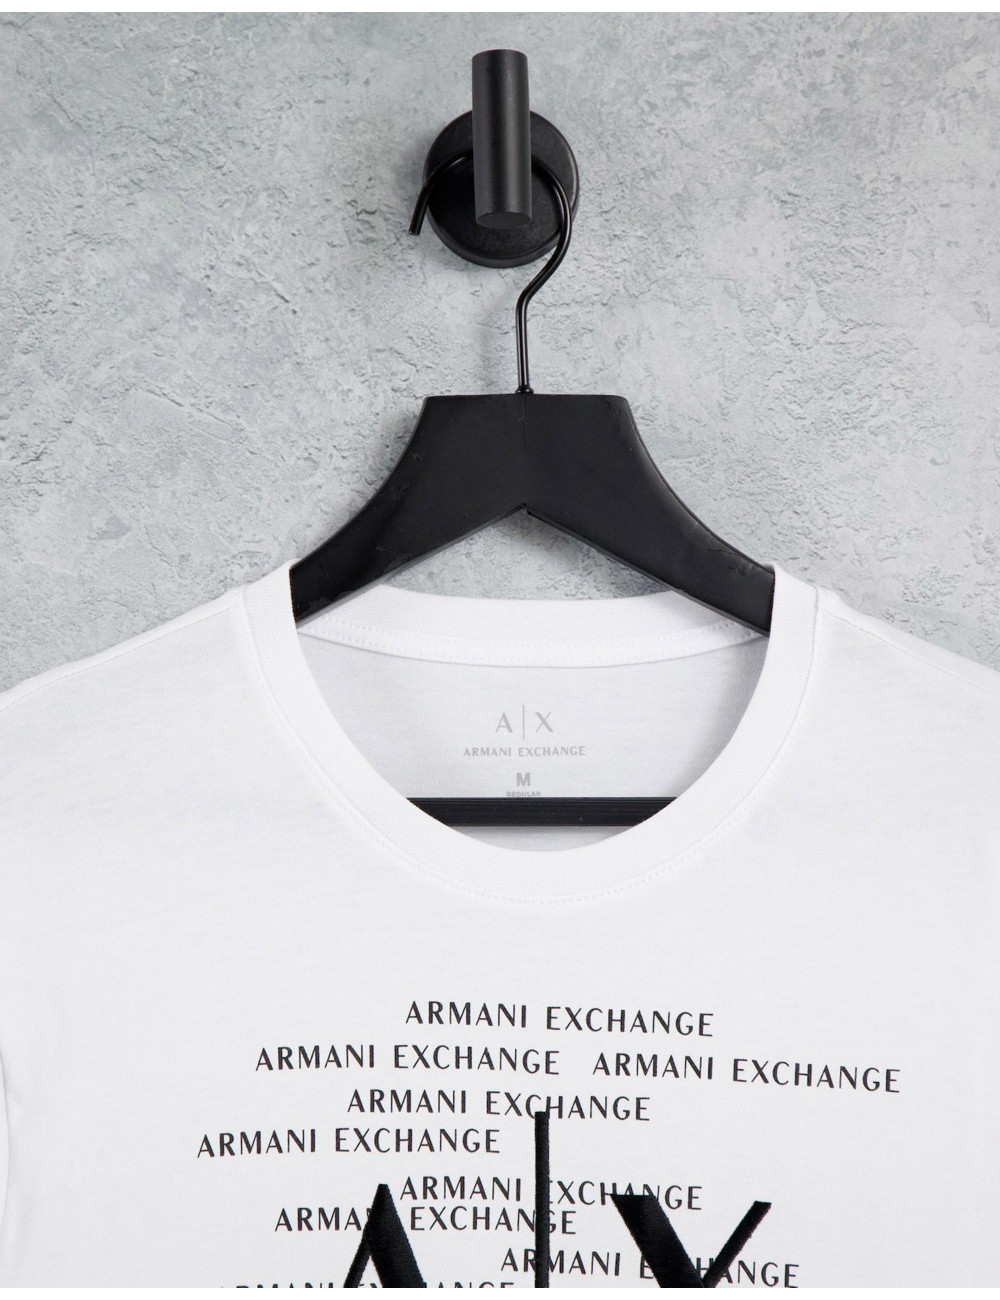 Armani Exchange central...